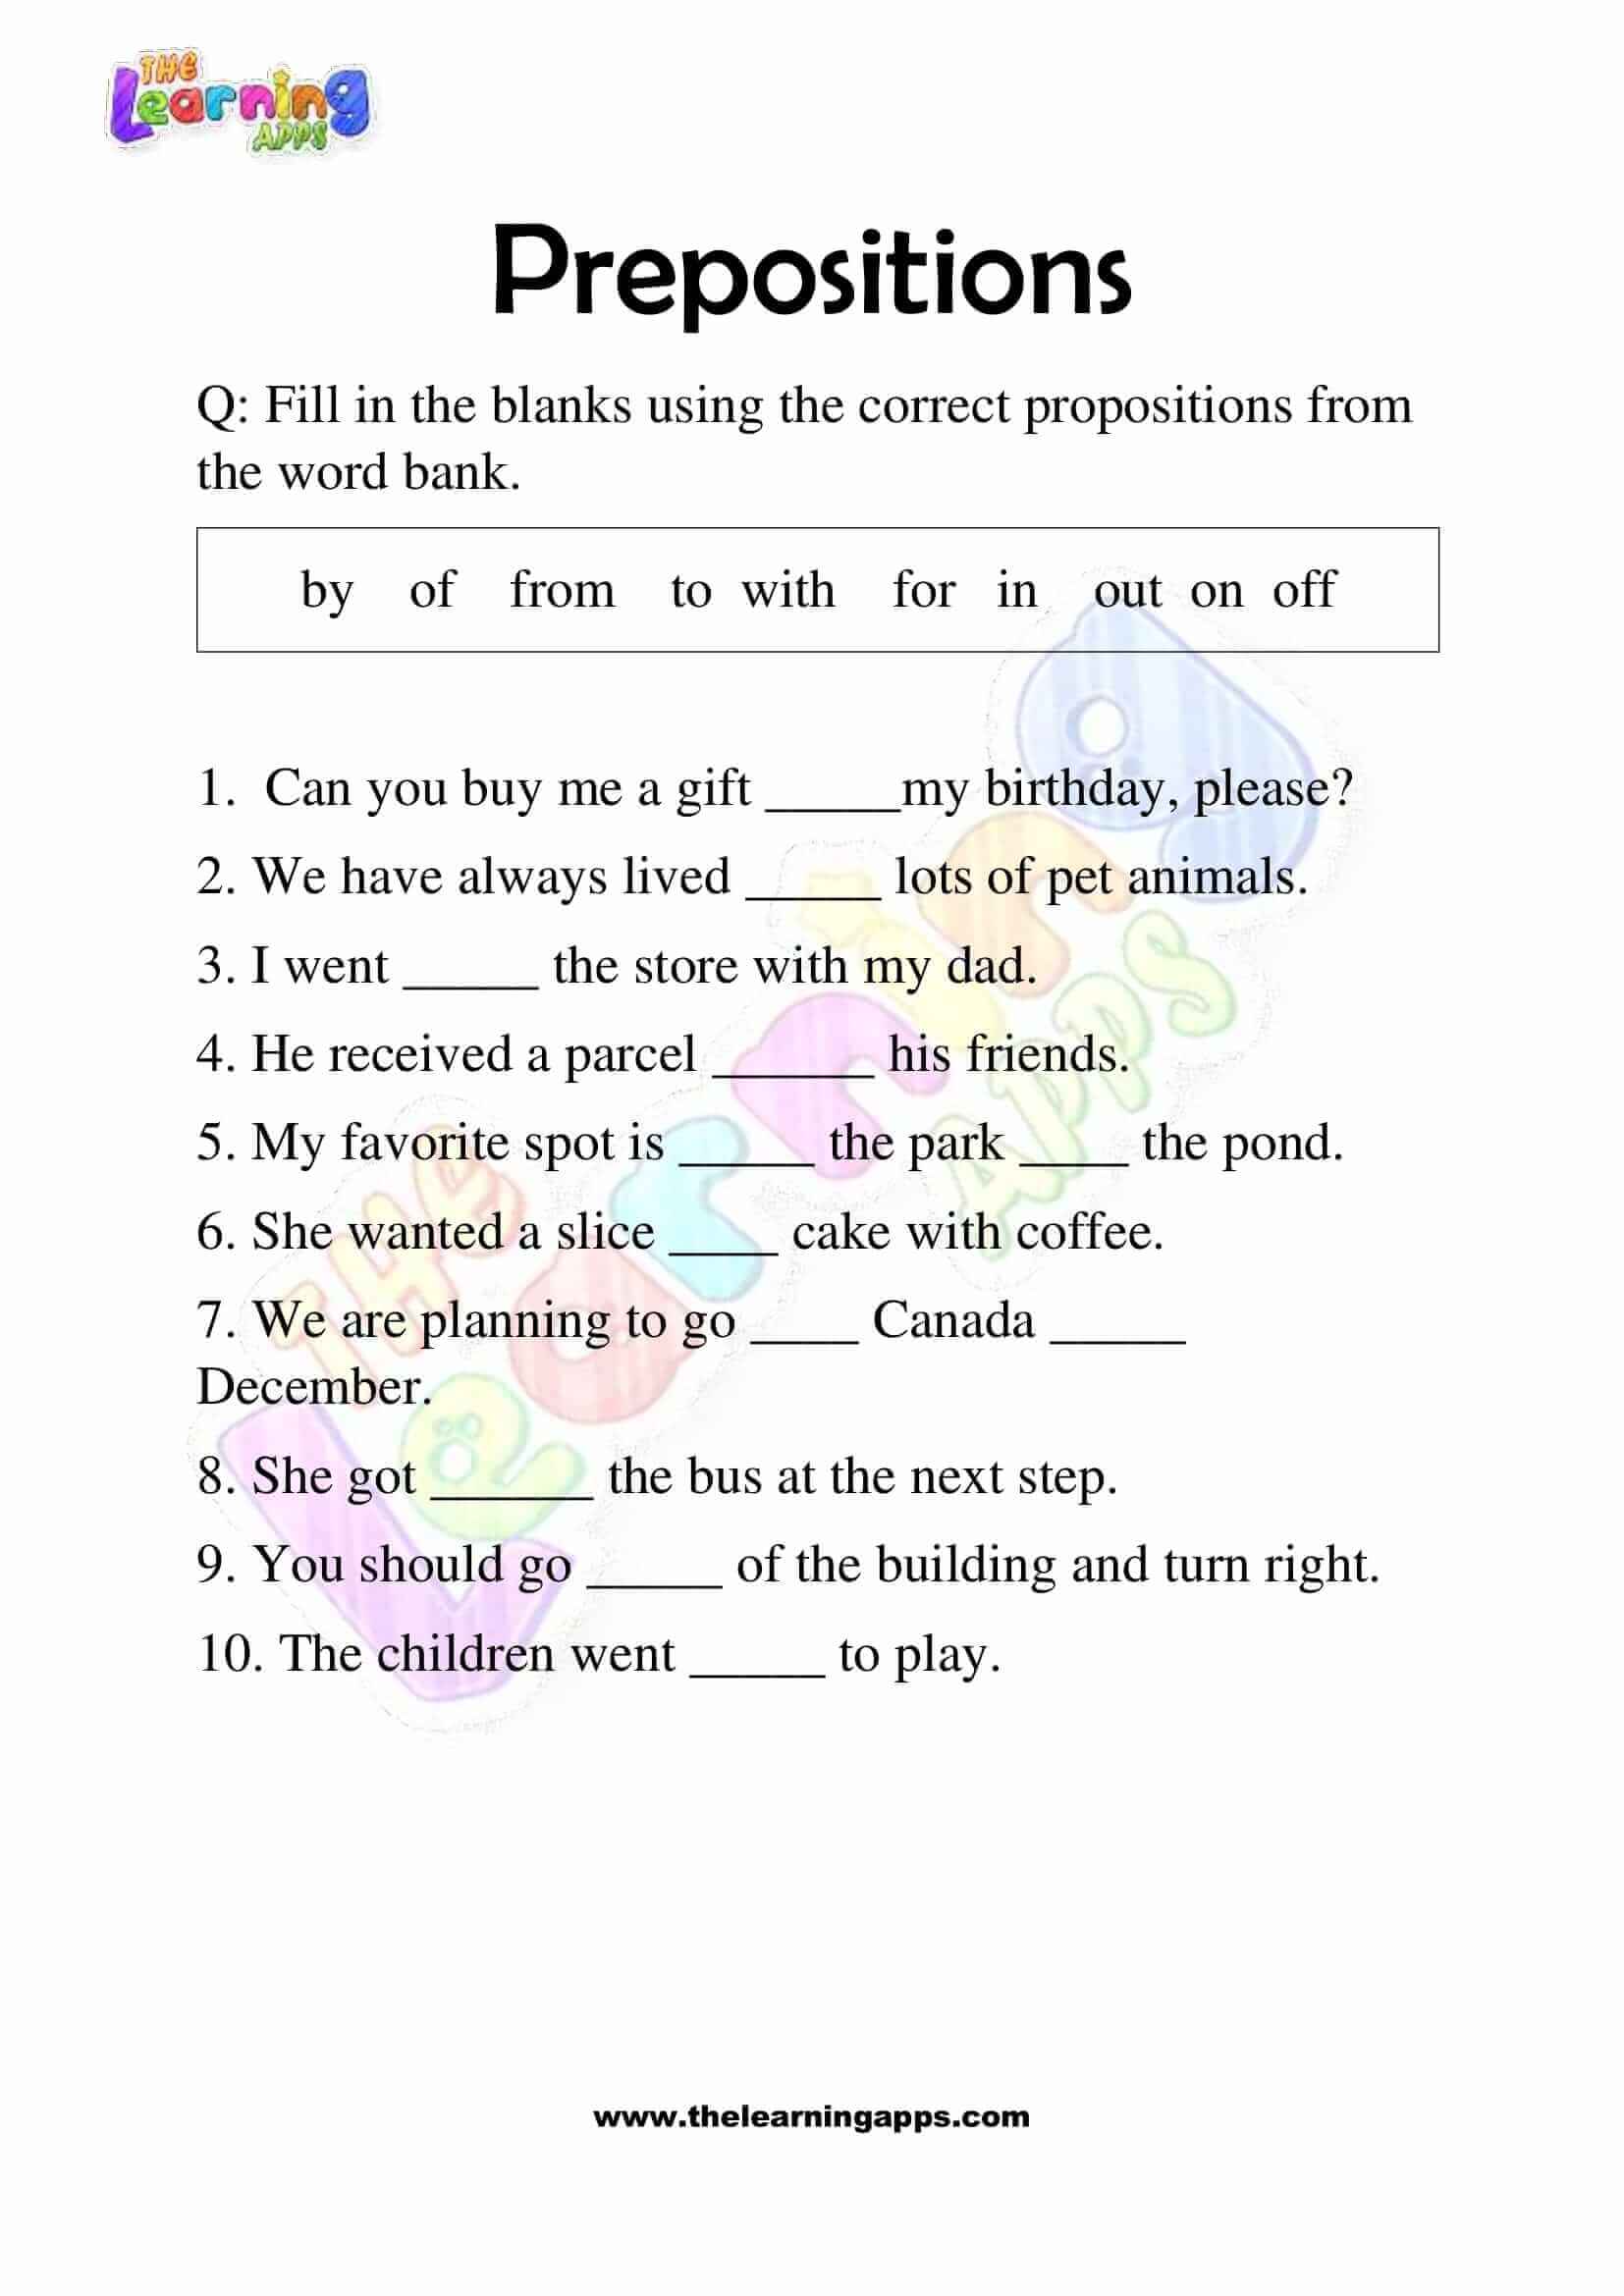 Prepositions-Worksheets-Grade-3-Activity-3